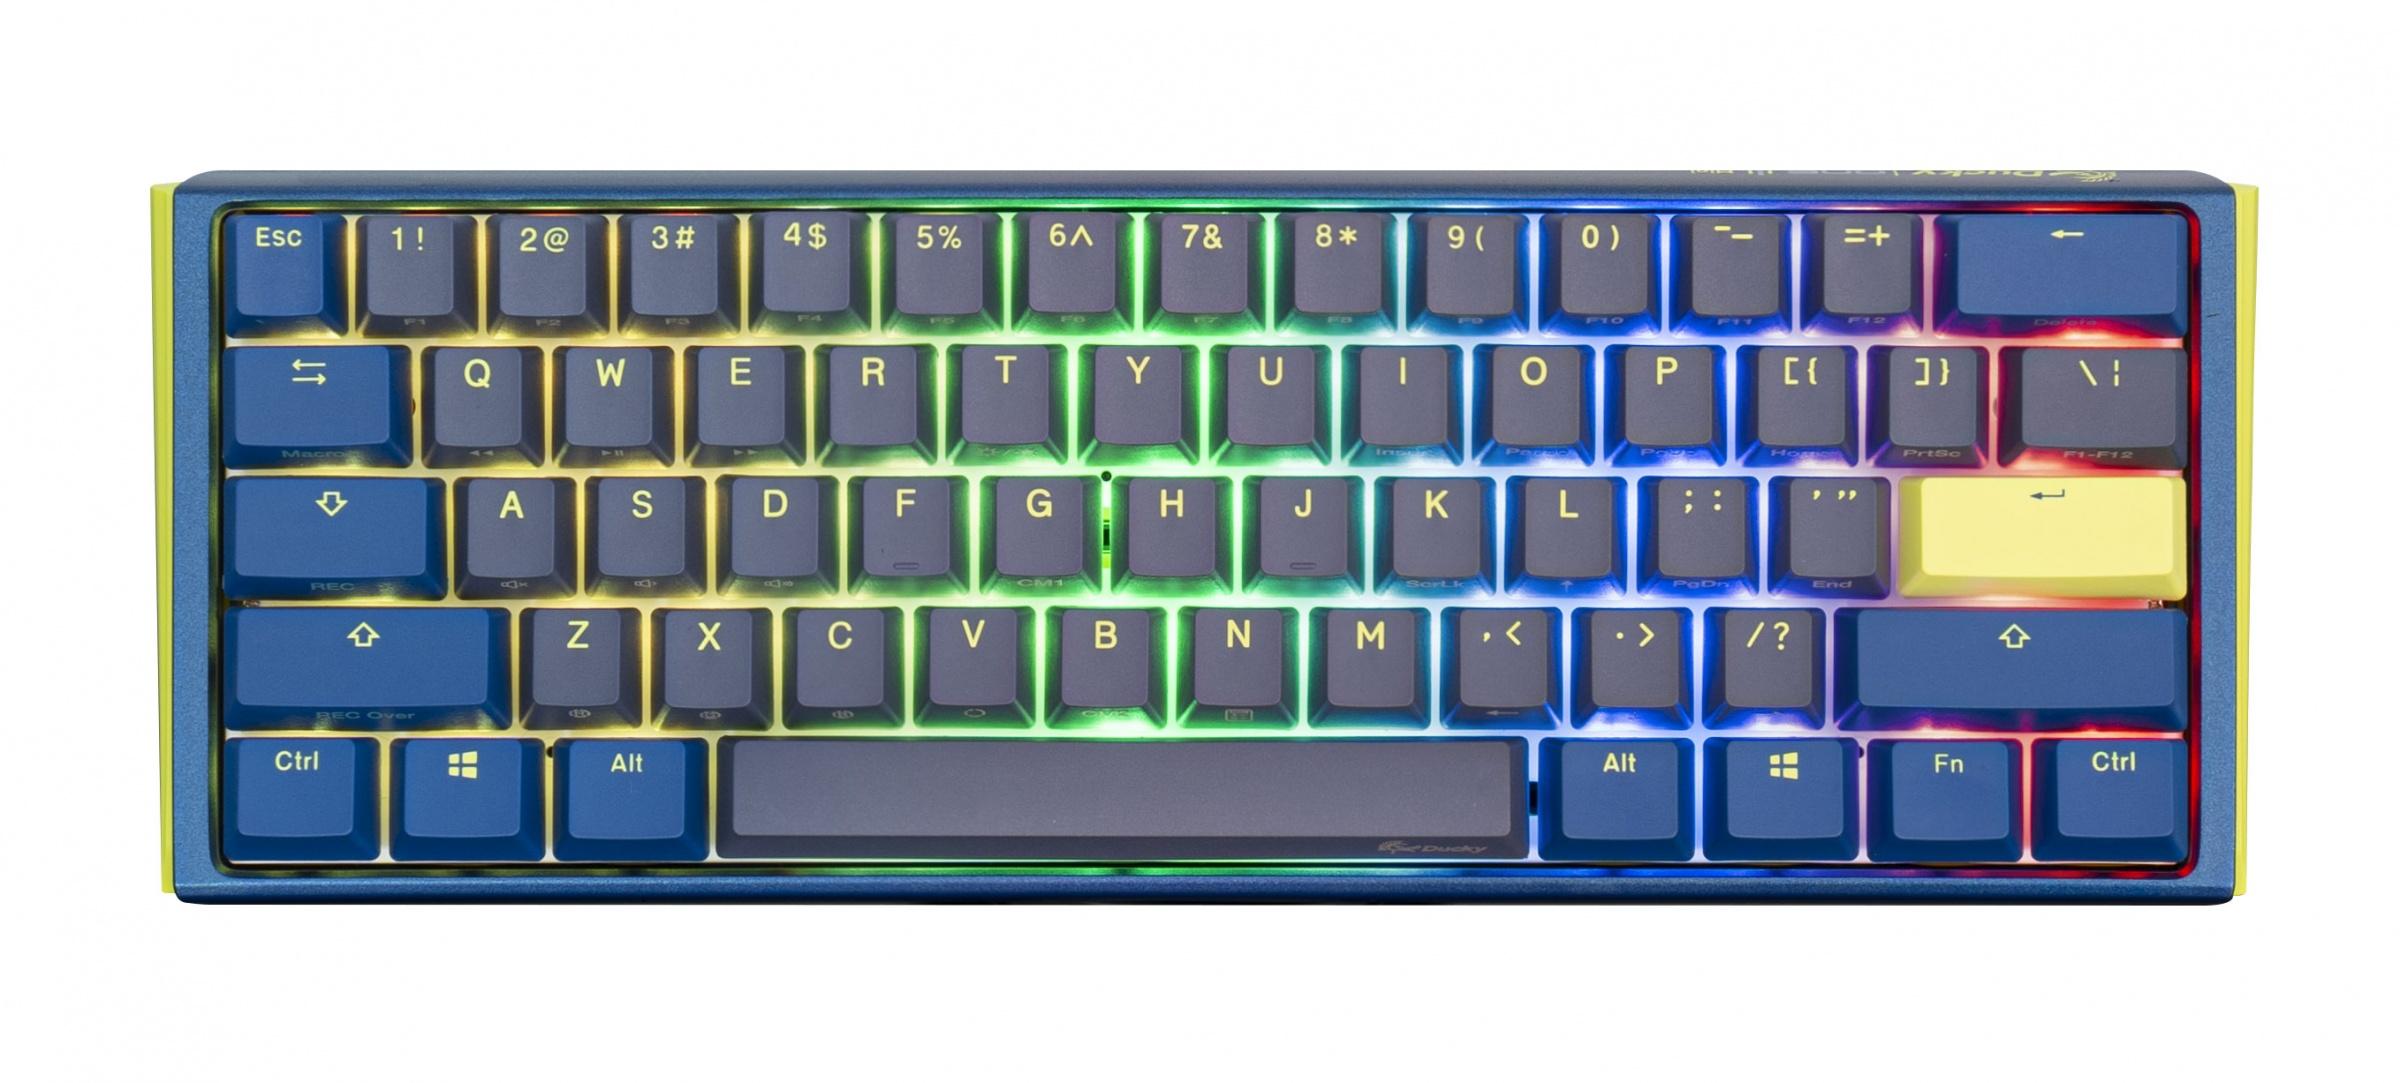 Геймърска механична клавиатура Ducky One 3 DayBreak 60% Hotswap Cherry MX Silver RGB, PBT Keycaps